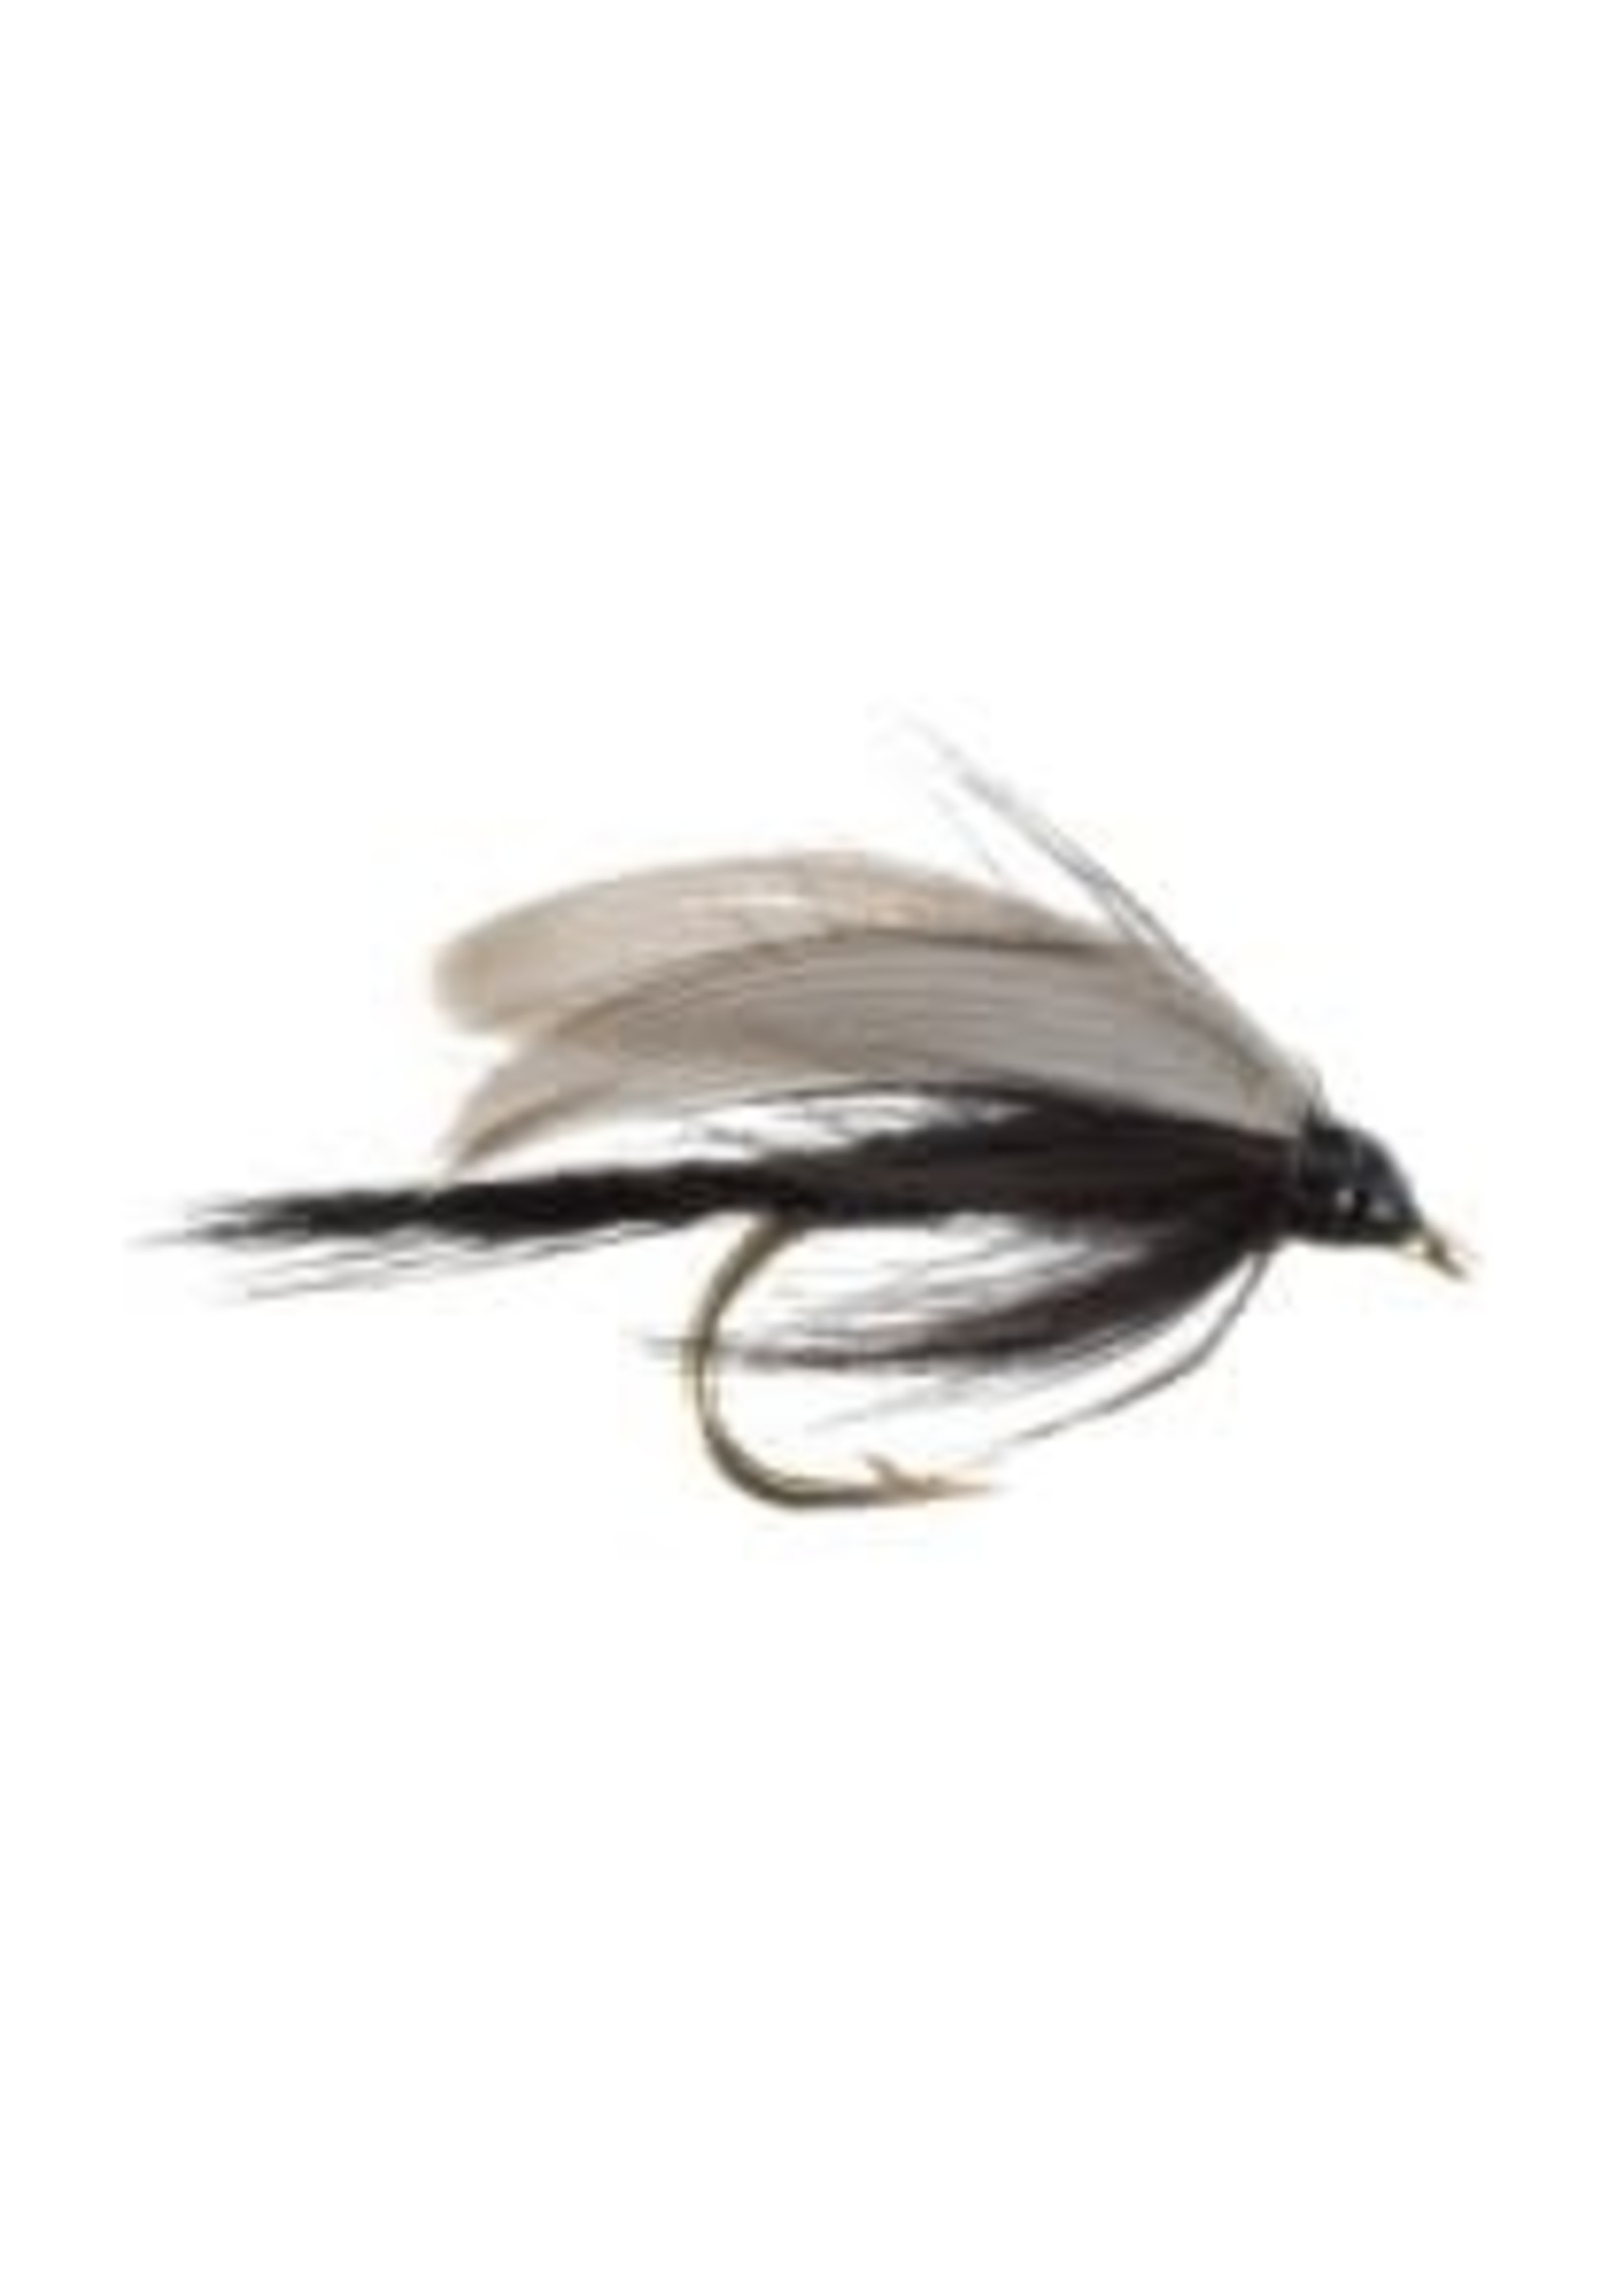 Wet Fly : Black Gnat hook size 10 single